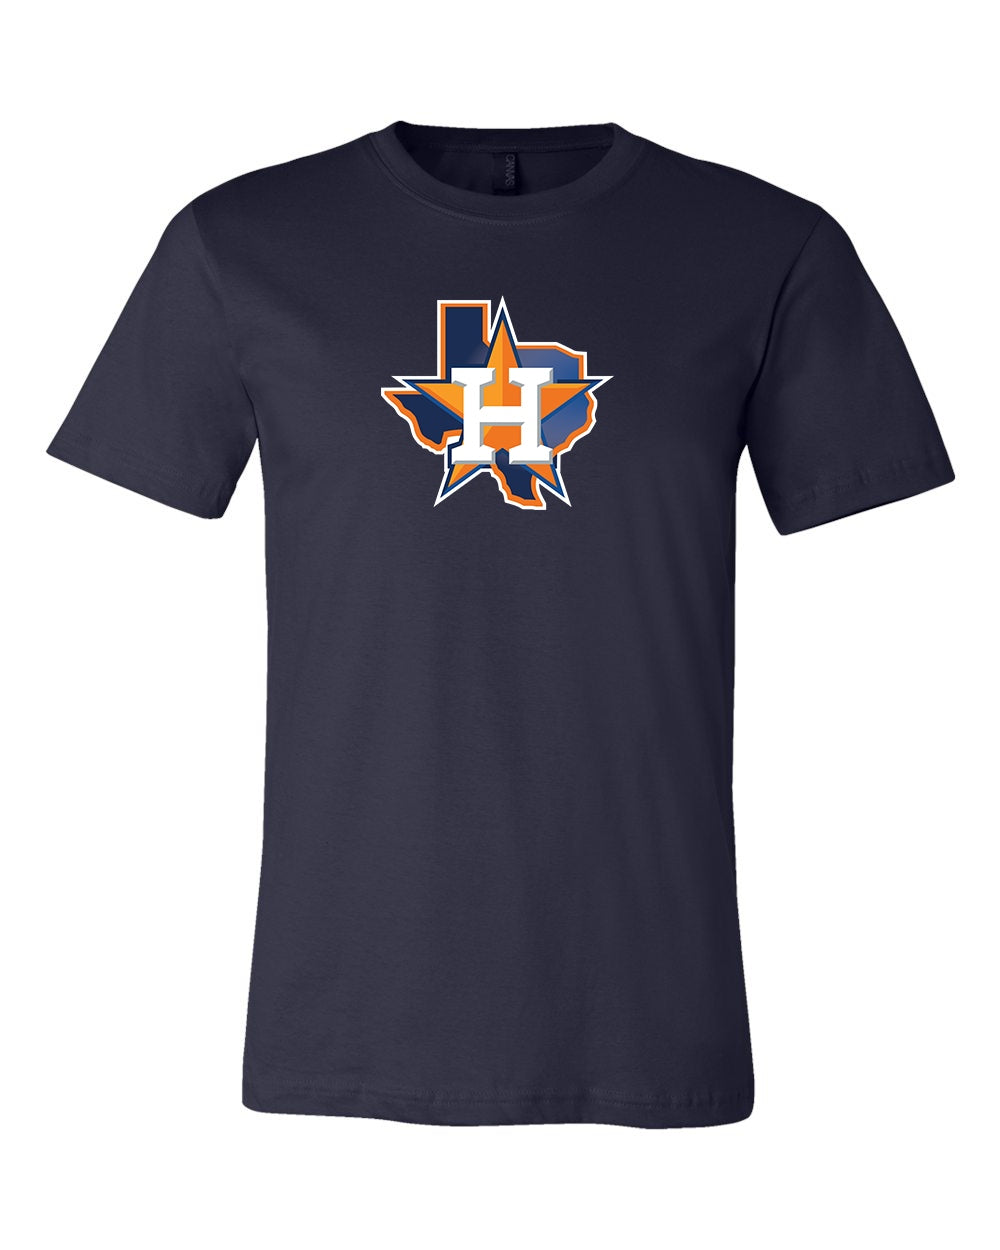 Texas Things T-shirt Houston Texans Astros Stockyards 